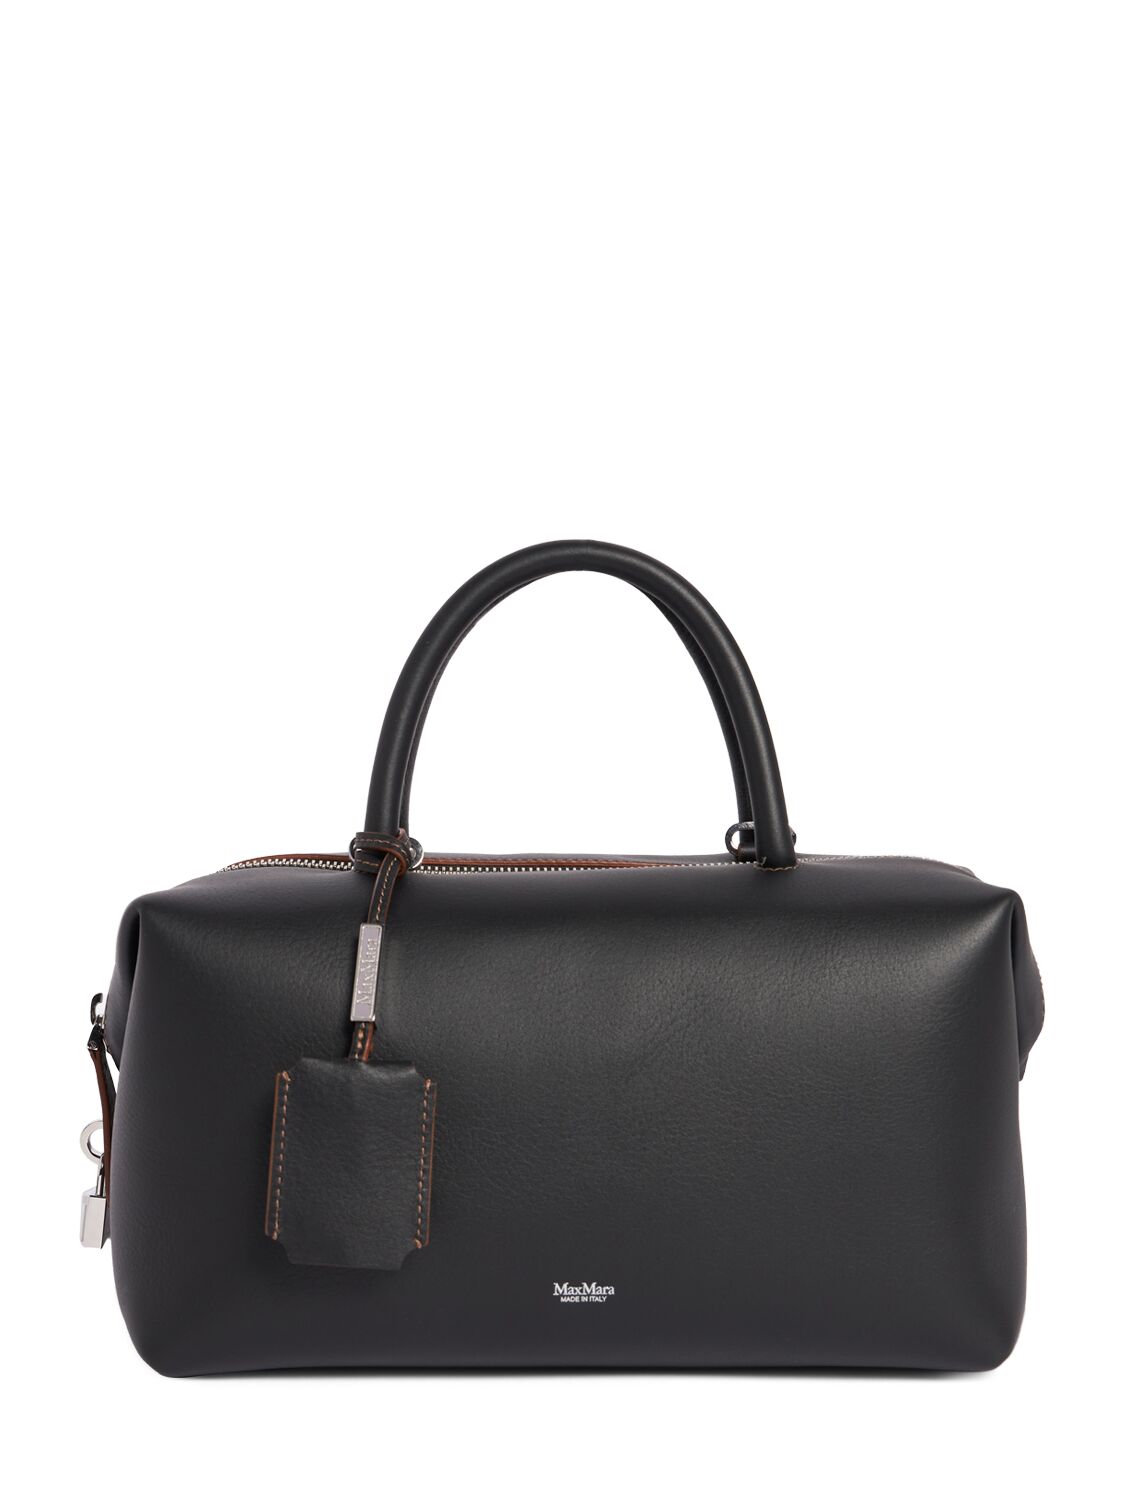 Max Mara Medium Holdall Top Handle Bag In Black